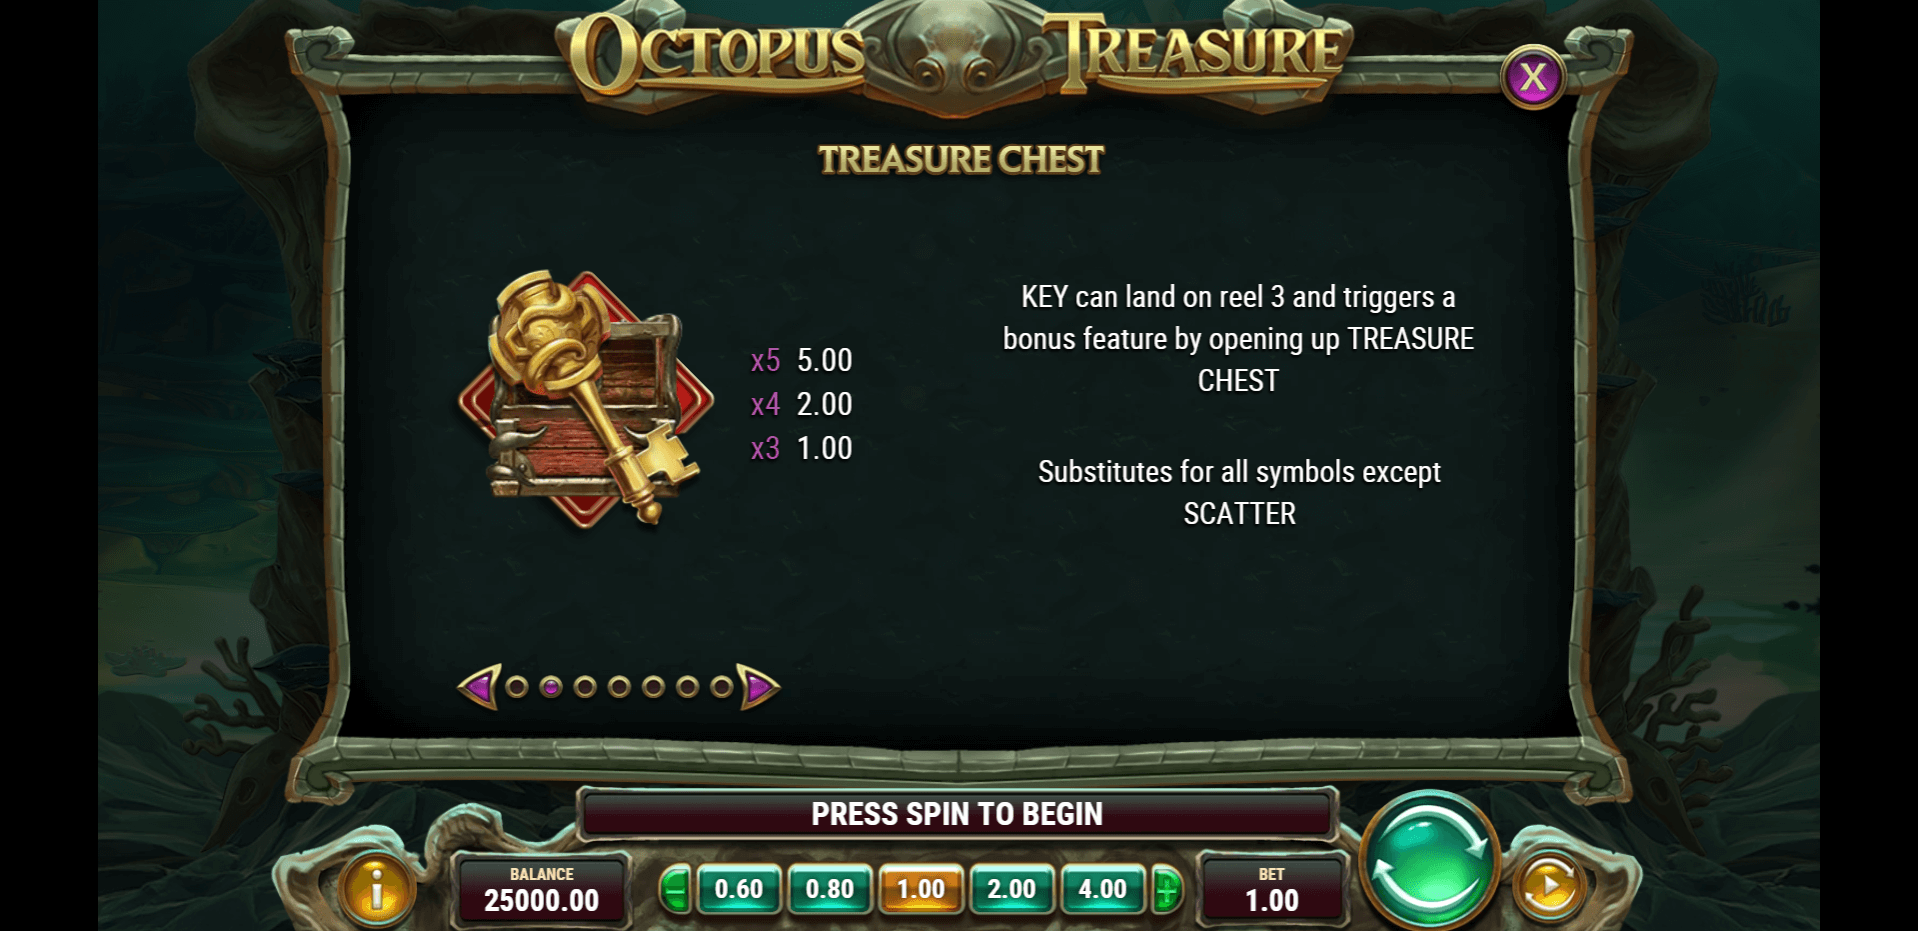 octopus treasure slot machine detail image 1